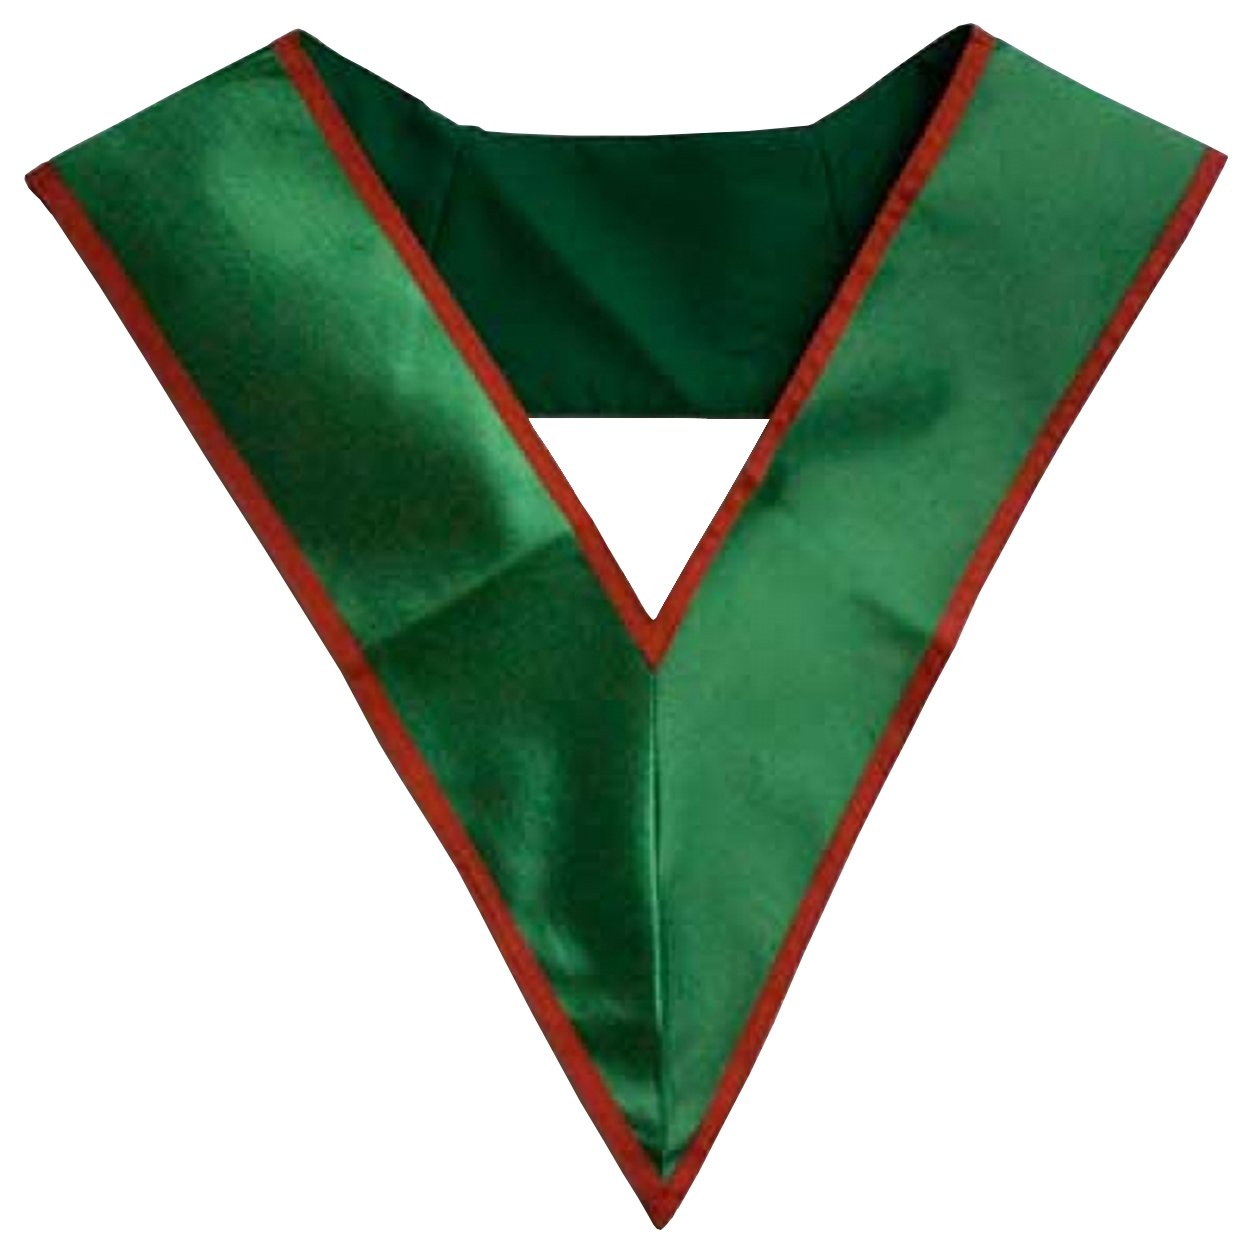 29th Degree Scottish Rite Collar - Green Moire with Red borders - Bricks Masons